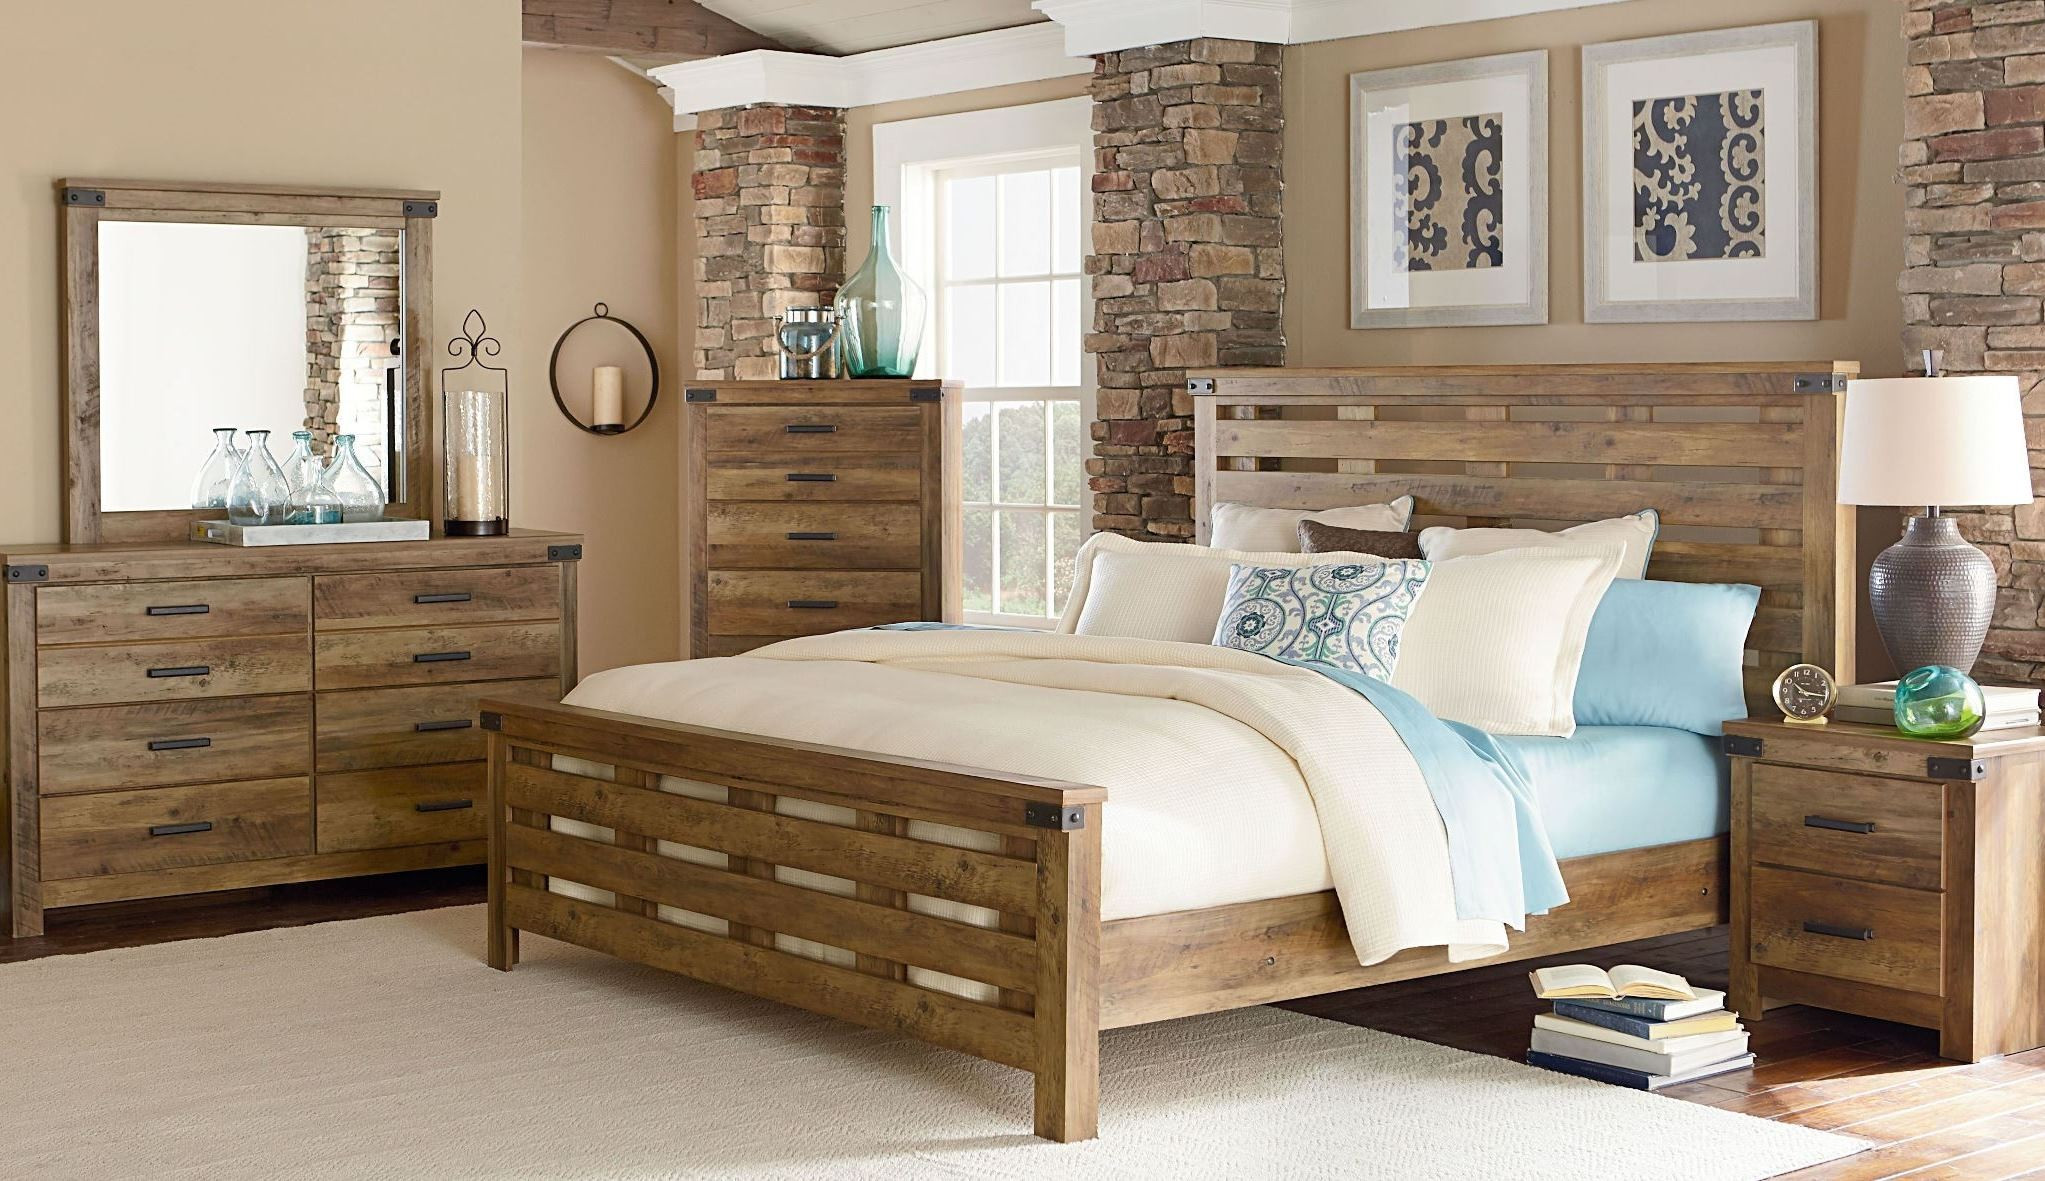 Rustic Bedroom Furniture Sets
 Montana Rustic Buckskin Panel Bedroom Set from Standard